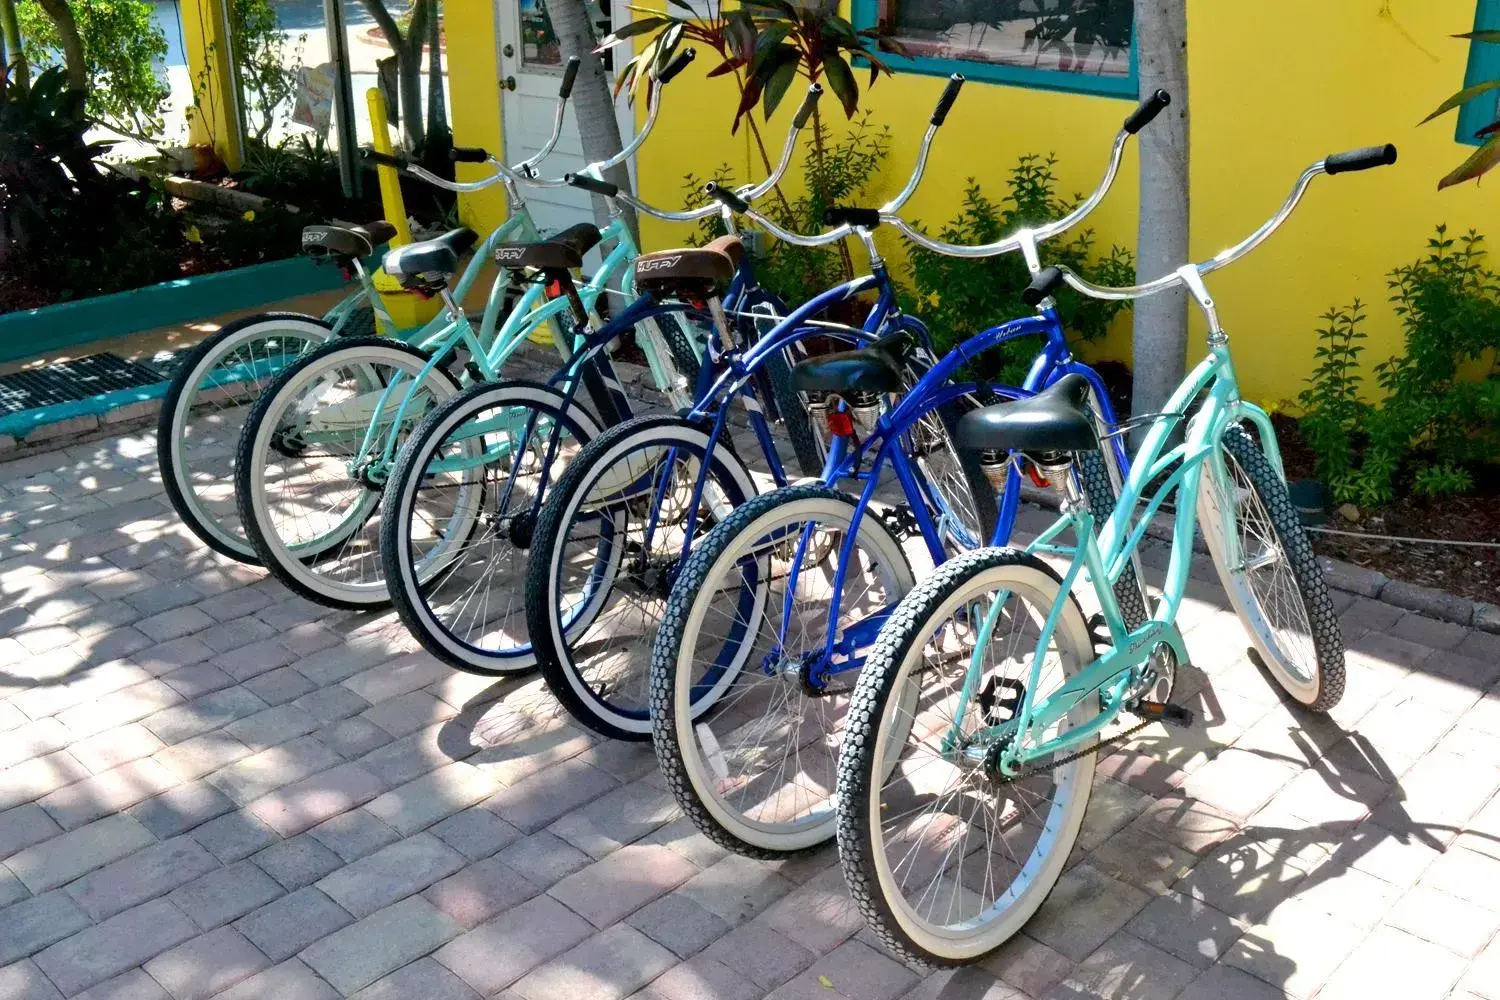 Cycling, Other Activities in La Jolla Resort